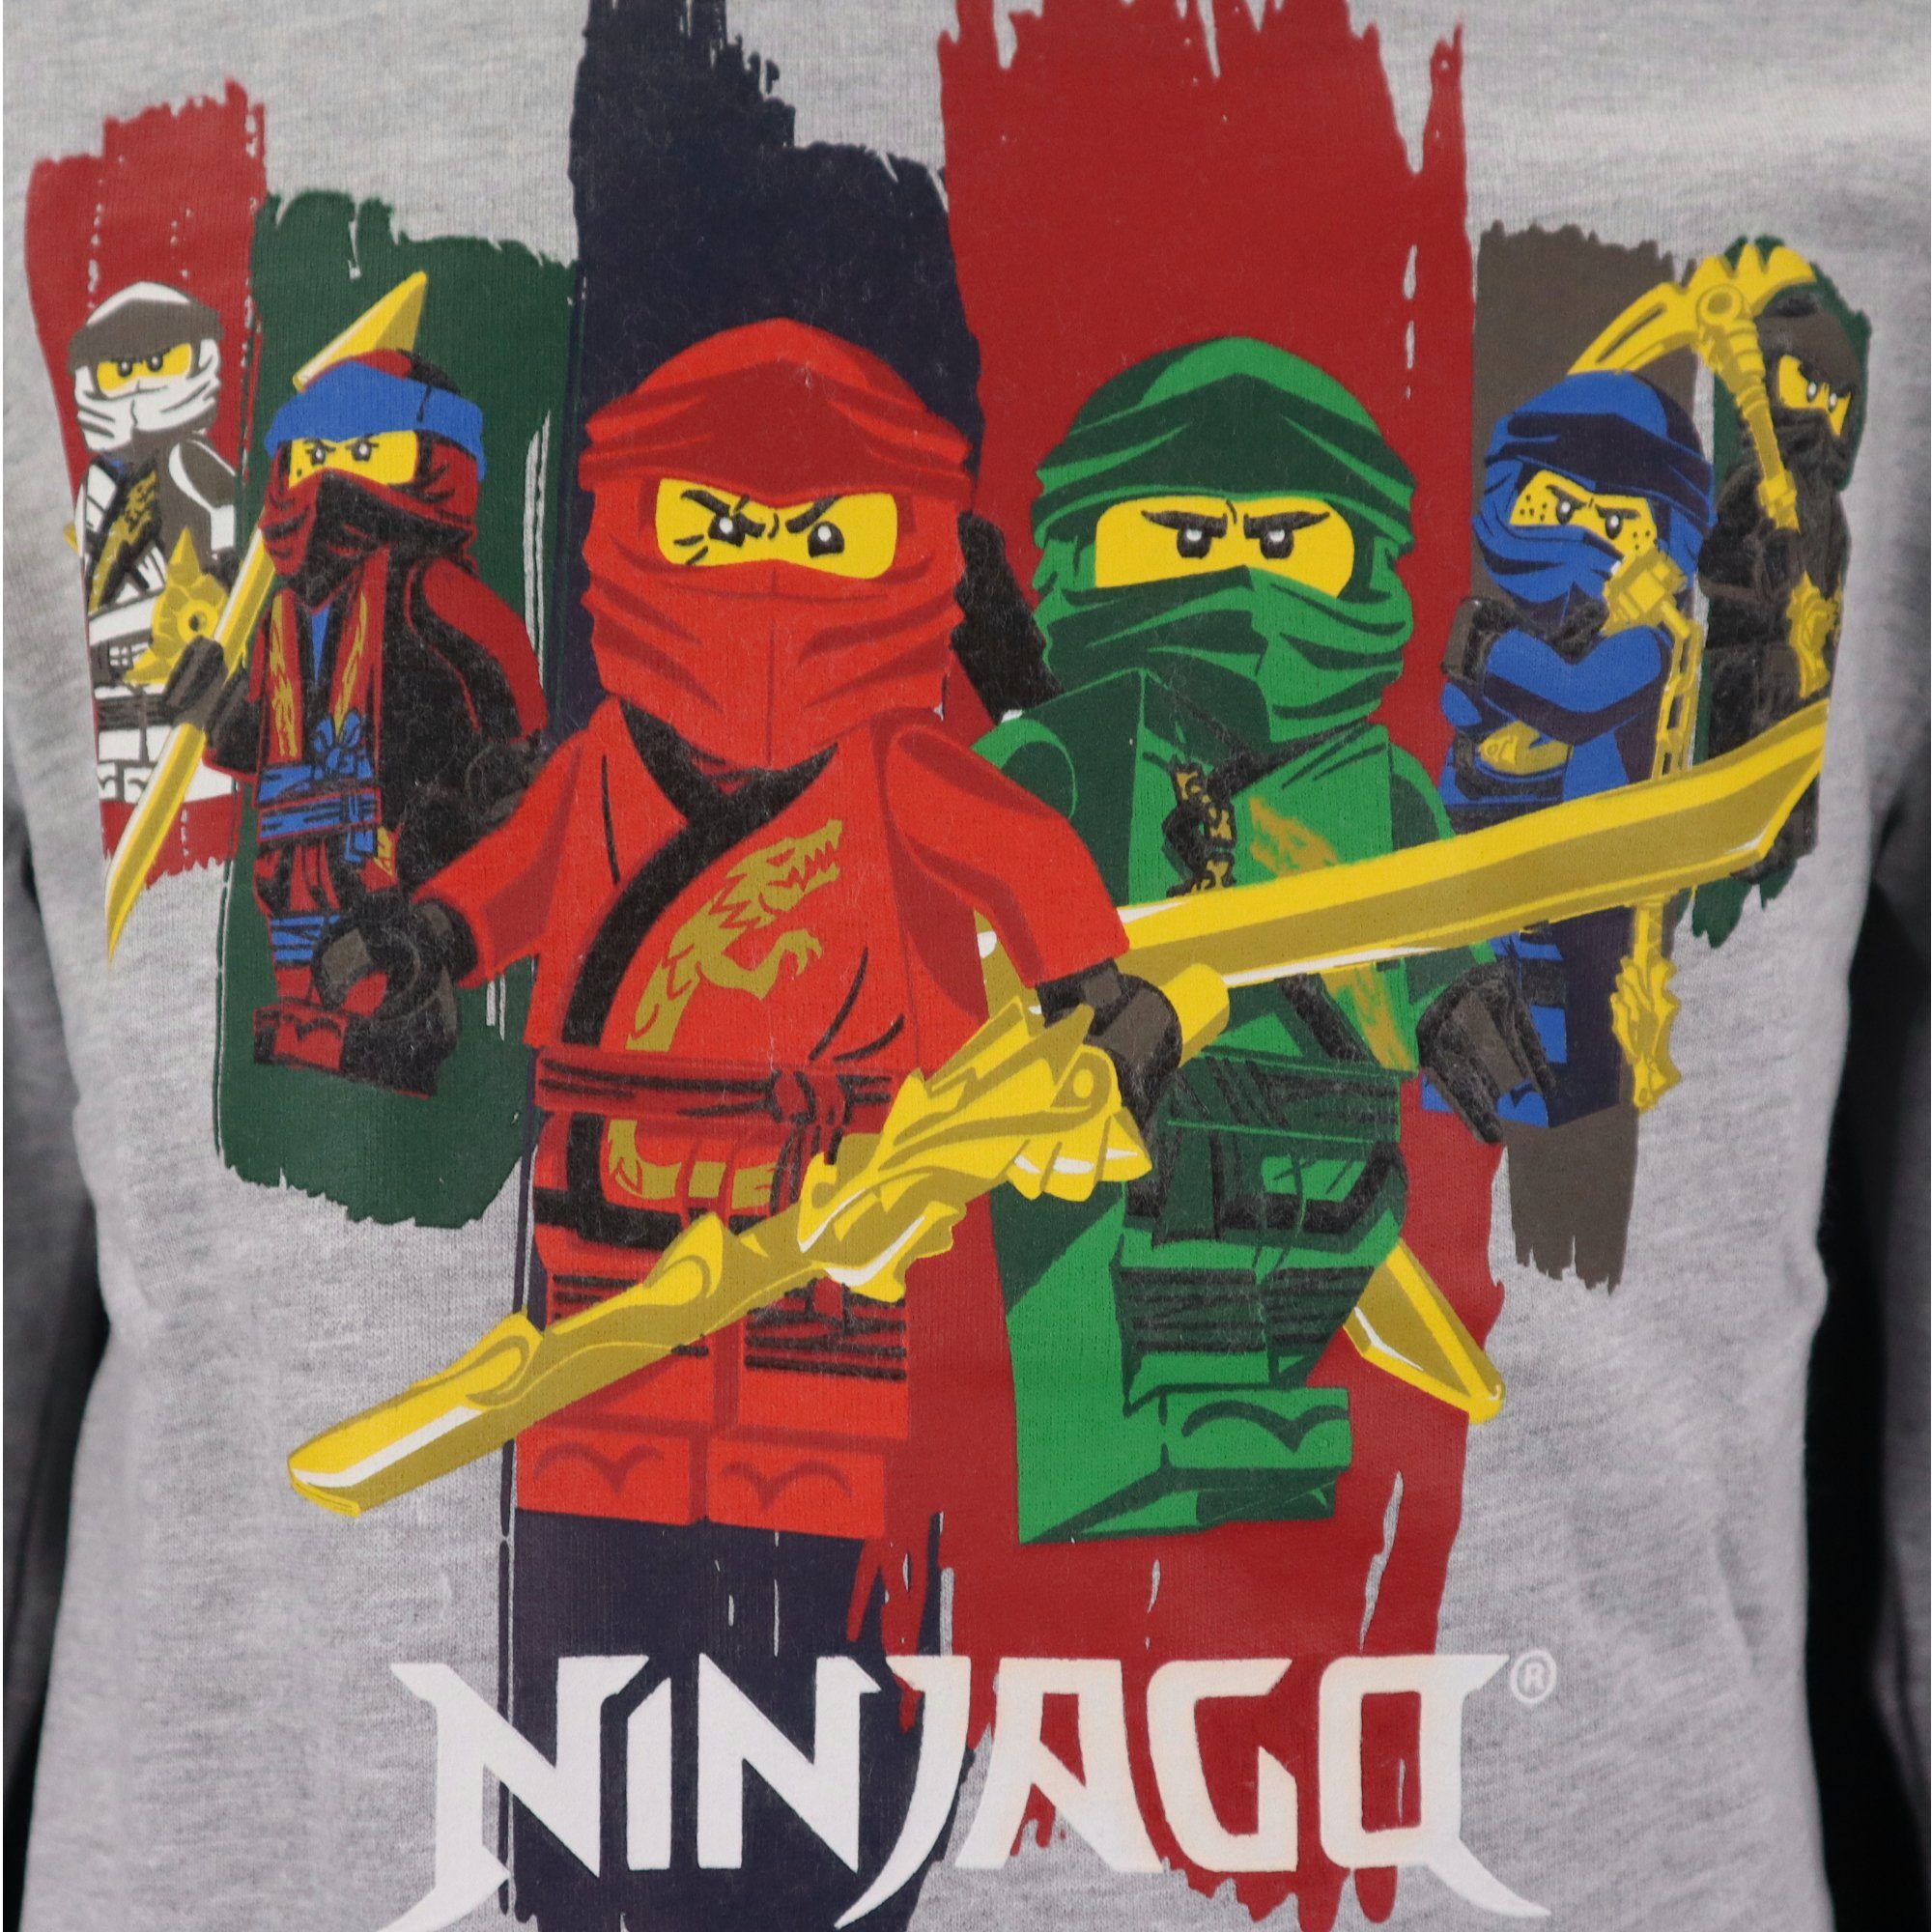 Grau Pullover Kinder Schwarz Jungen Gr. Sweater 98 LEGO® bis Ninjago 128,